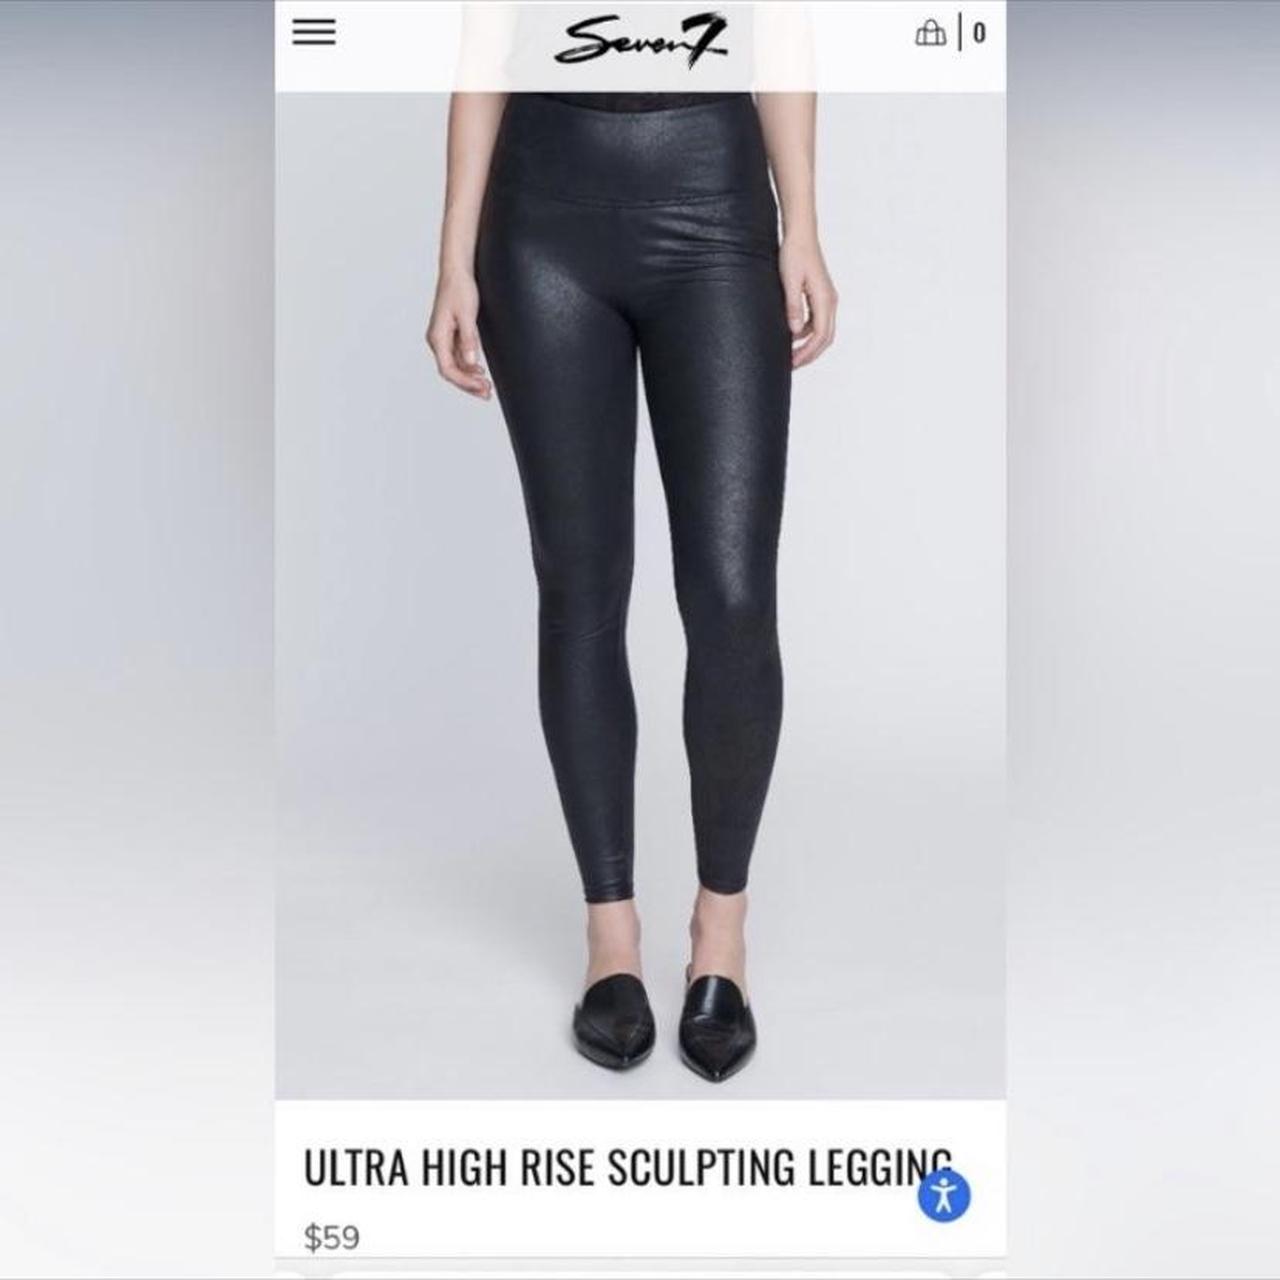 Seven7 ultra high rise sculpting leggings in - Depop